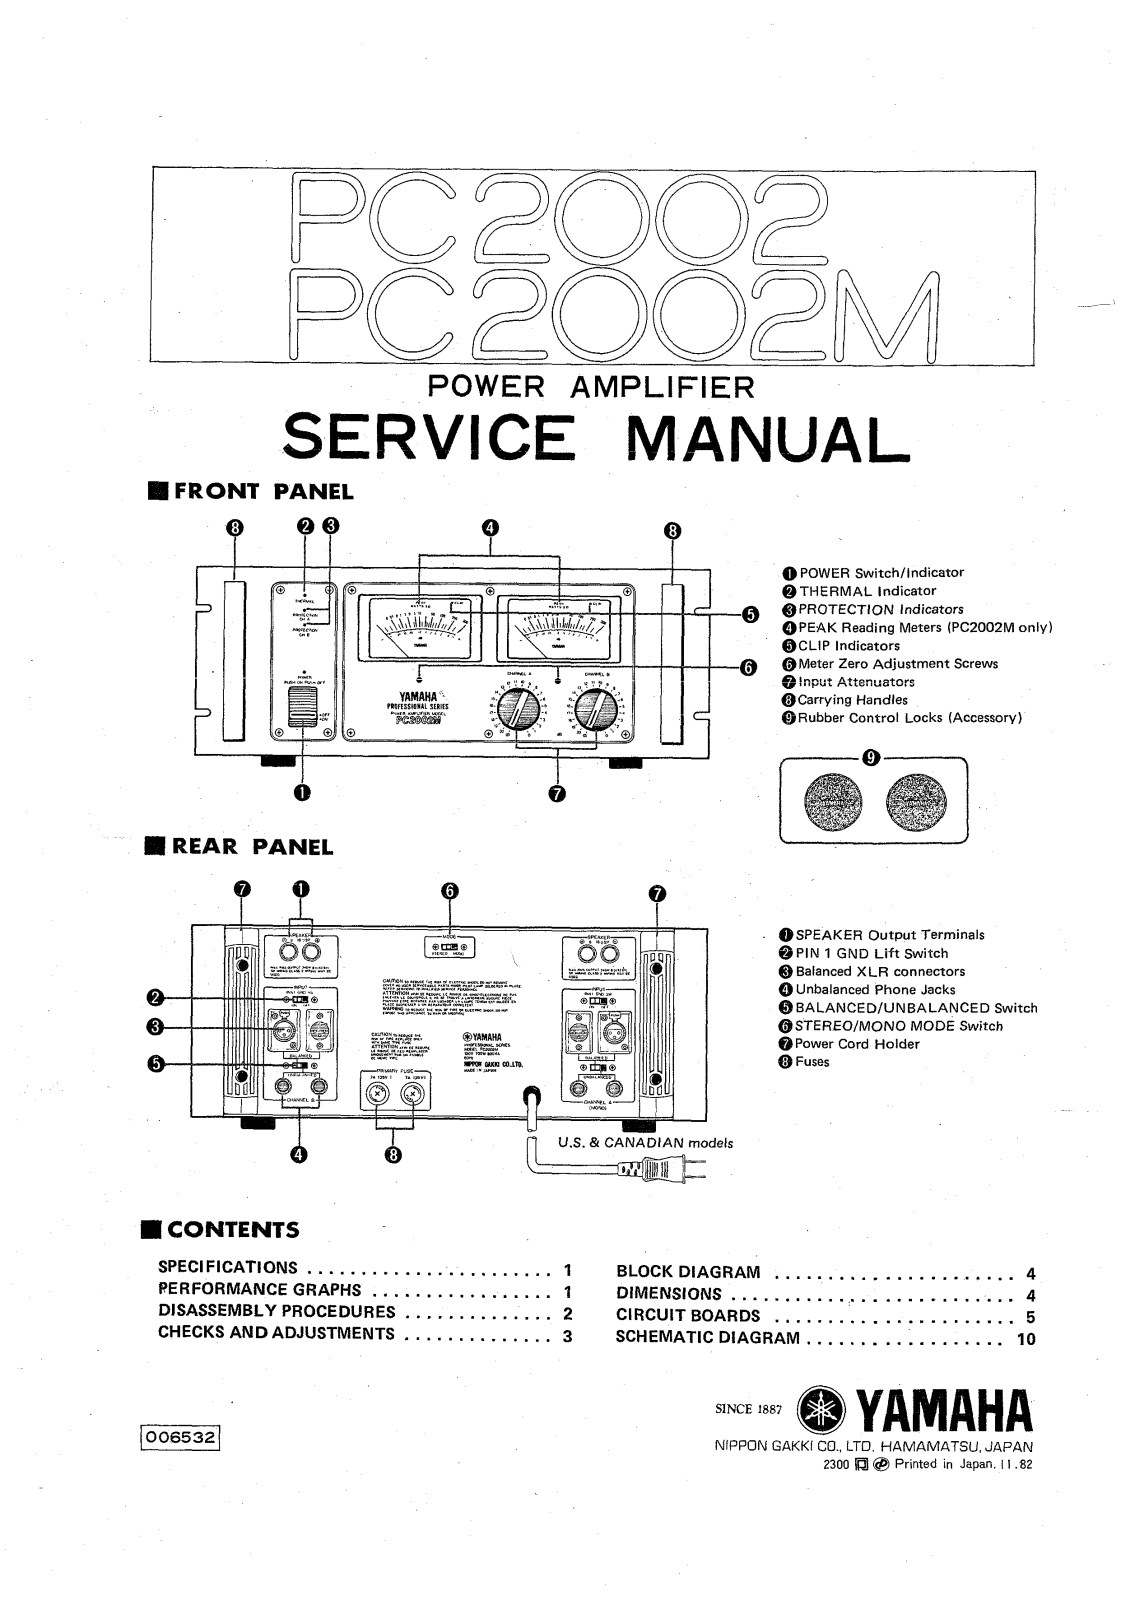 Yamaha PC-2002 Service manual